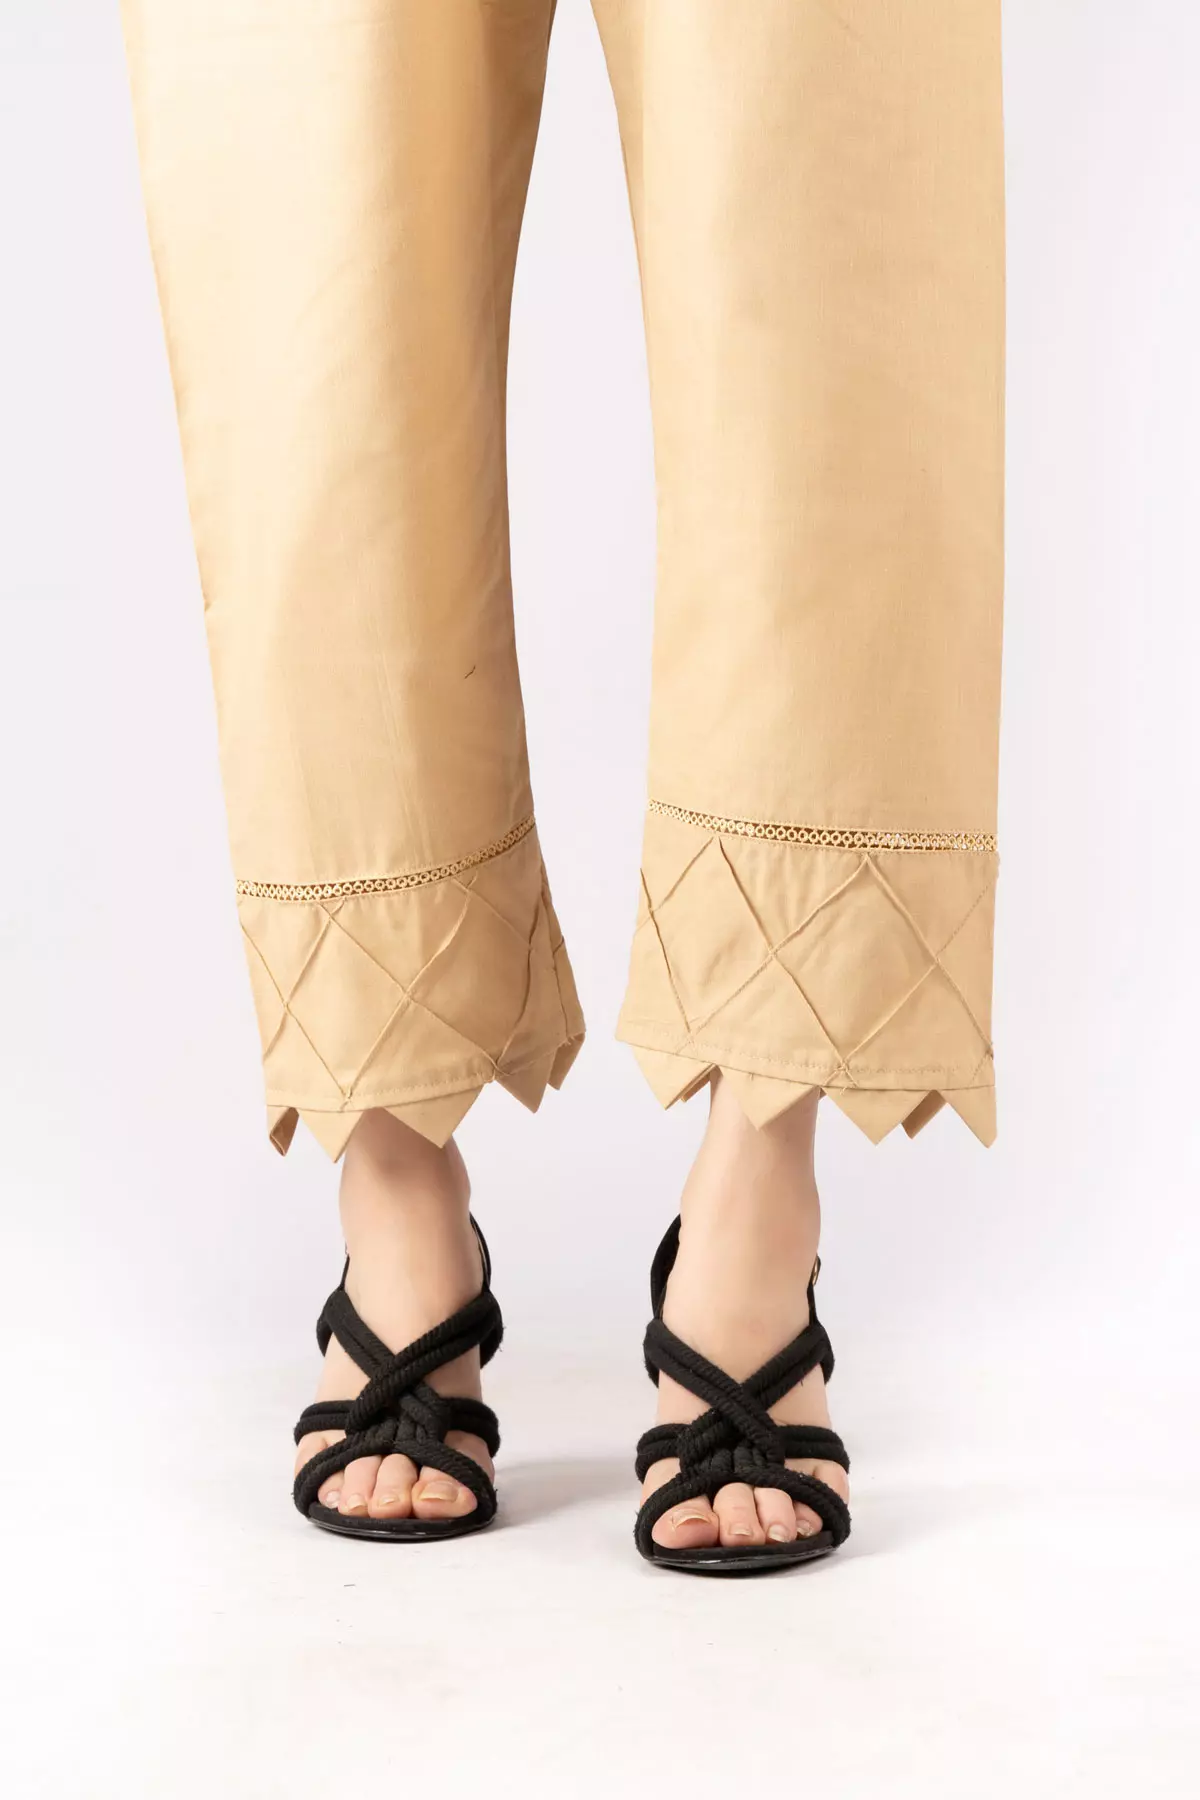 Latest Trousers Designs 2023 in Pakistan  Ultimate Guide  Global La Rosaa